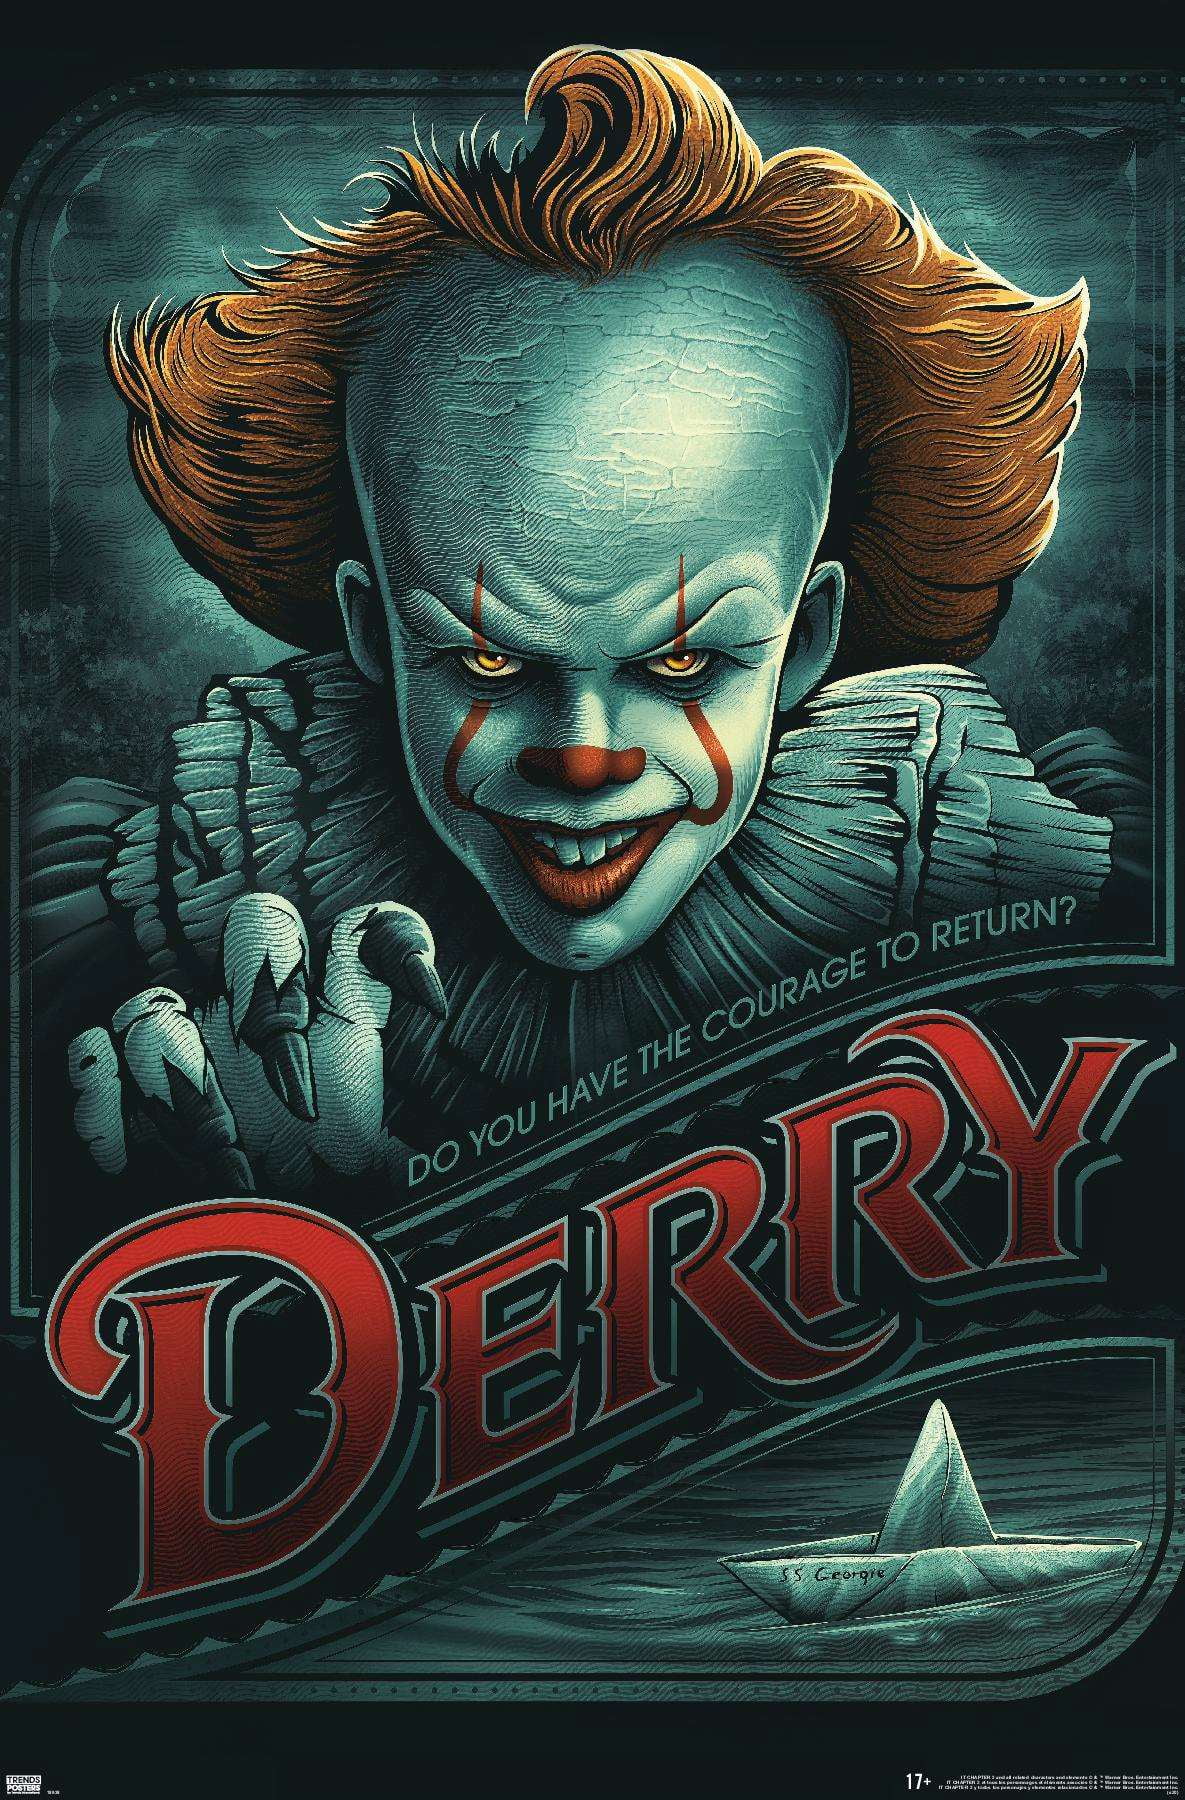 IT - Pennywise Derry Poster - Walmart.com - Walmart.com